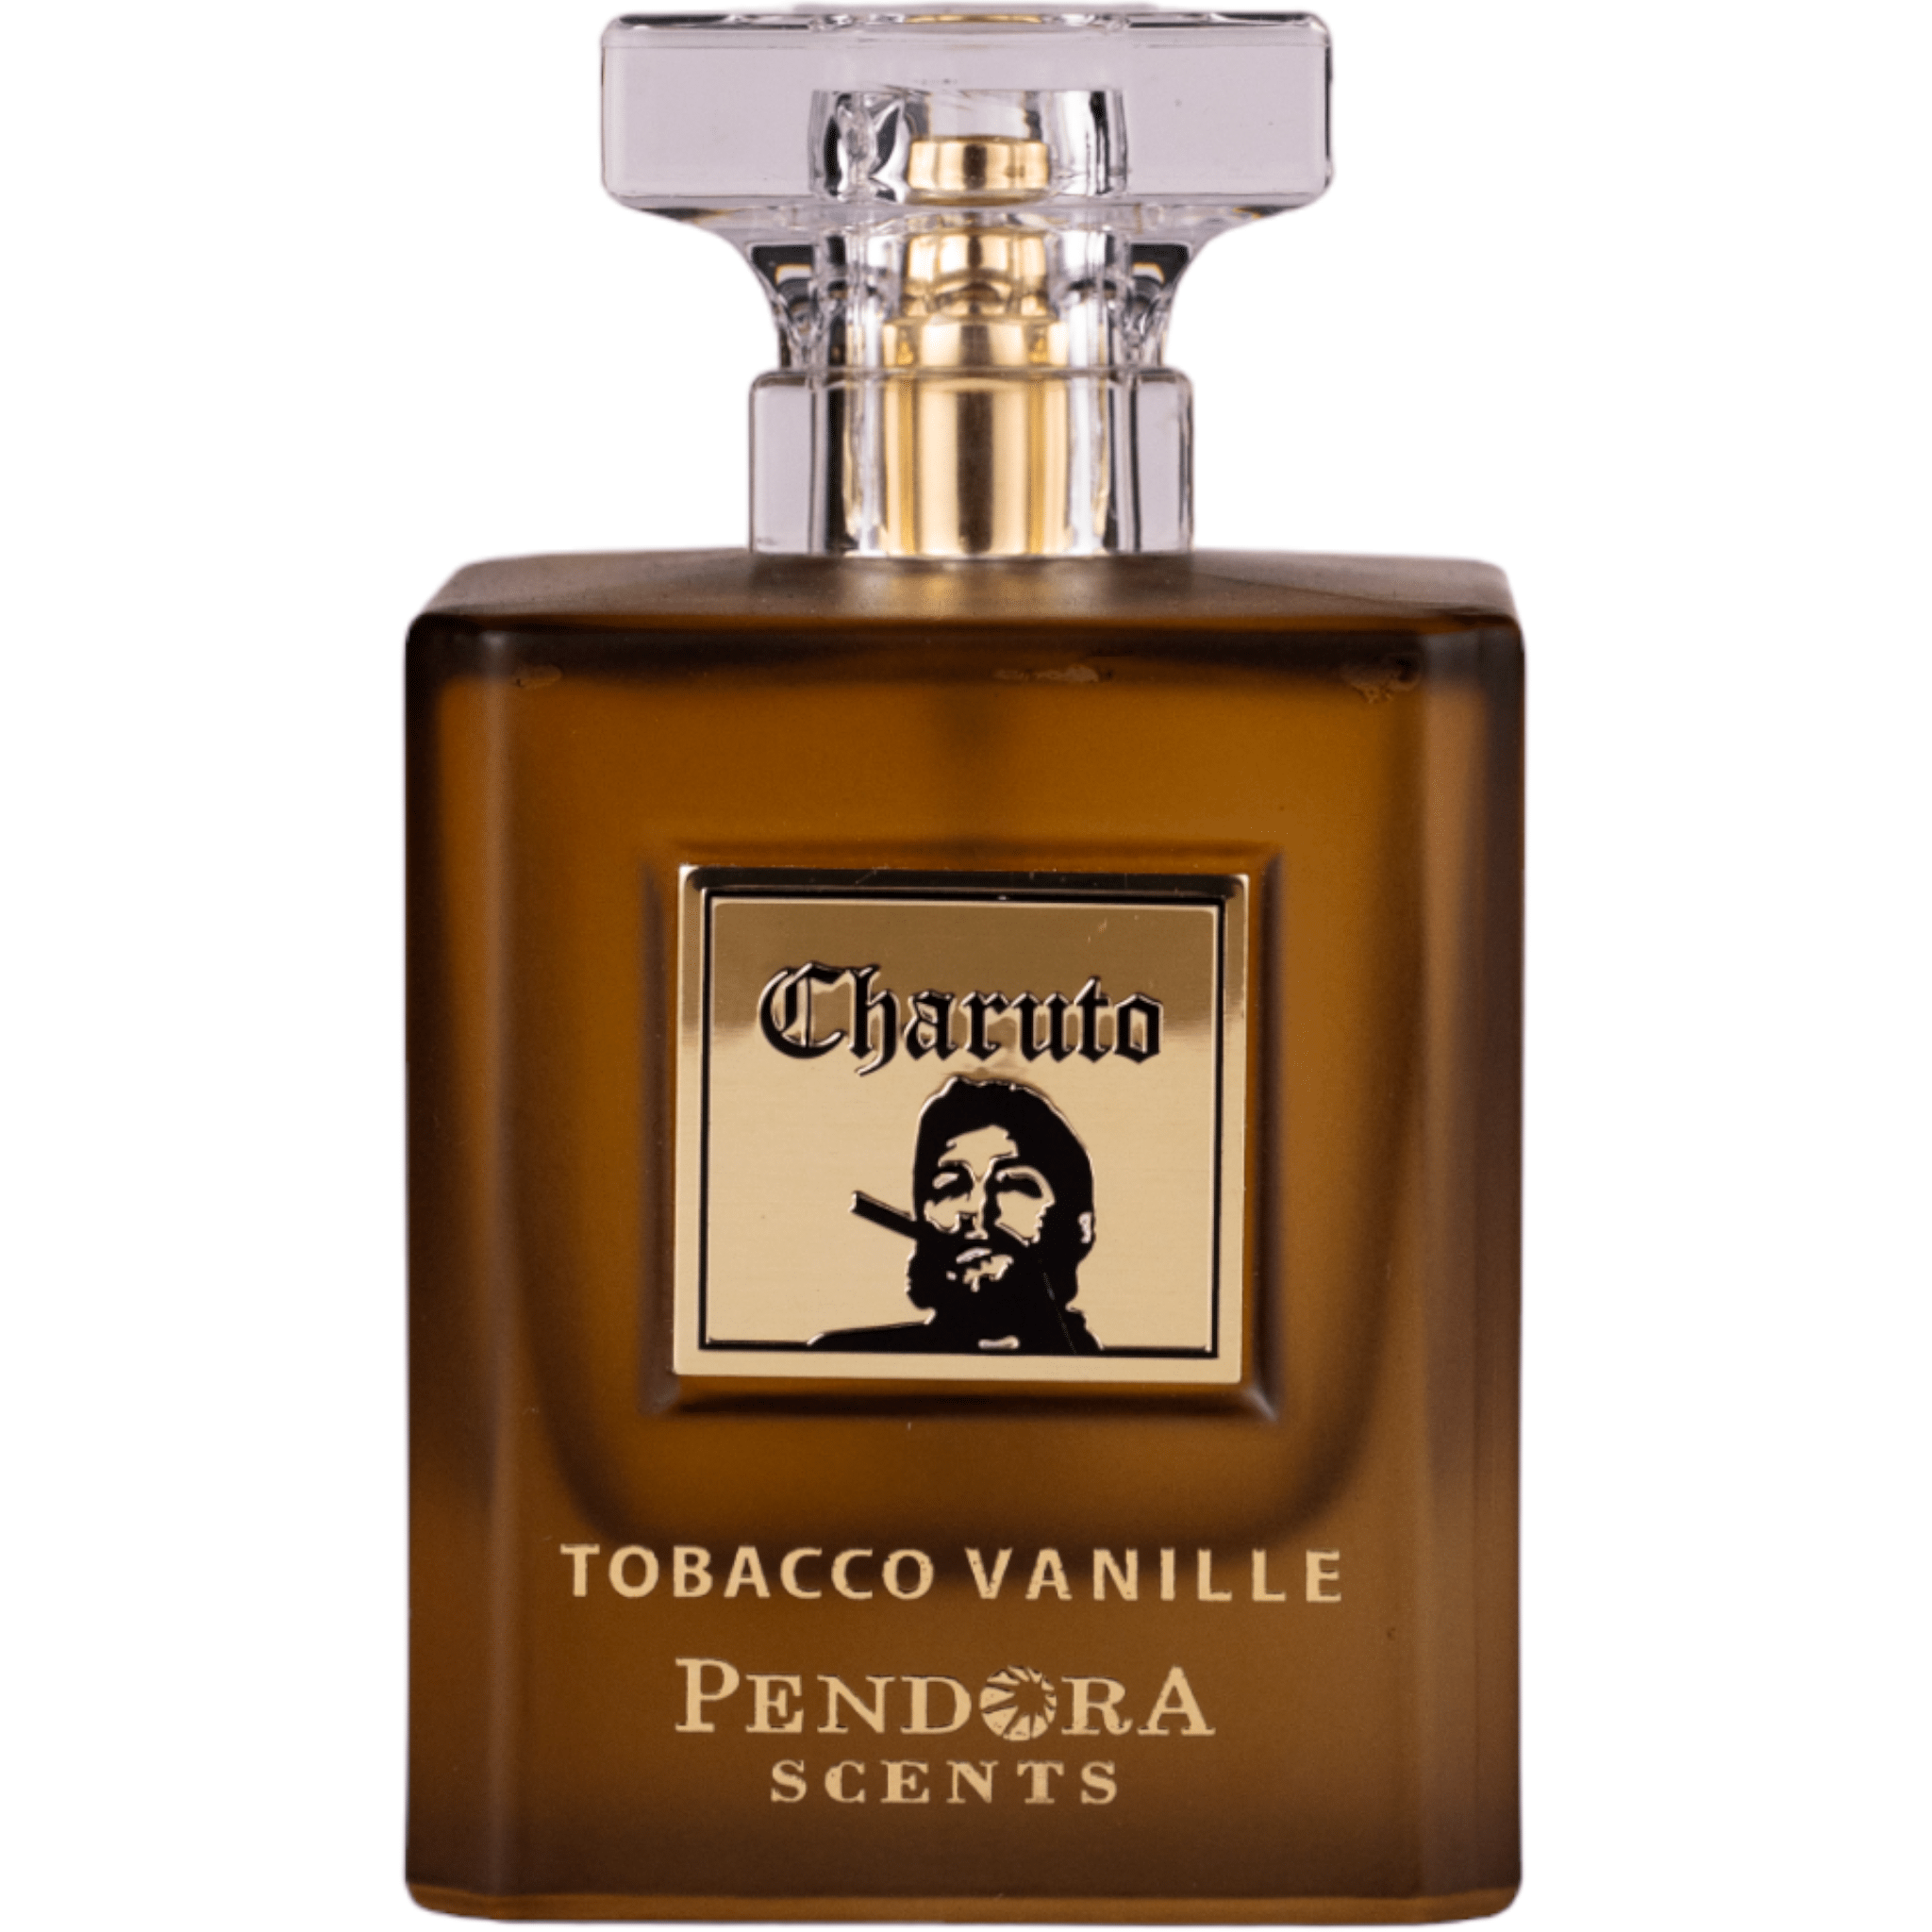 Charuto Tobacco Vanille 100ml by Pendora Scents by Paris Corner